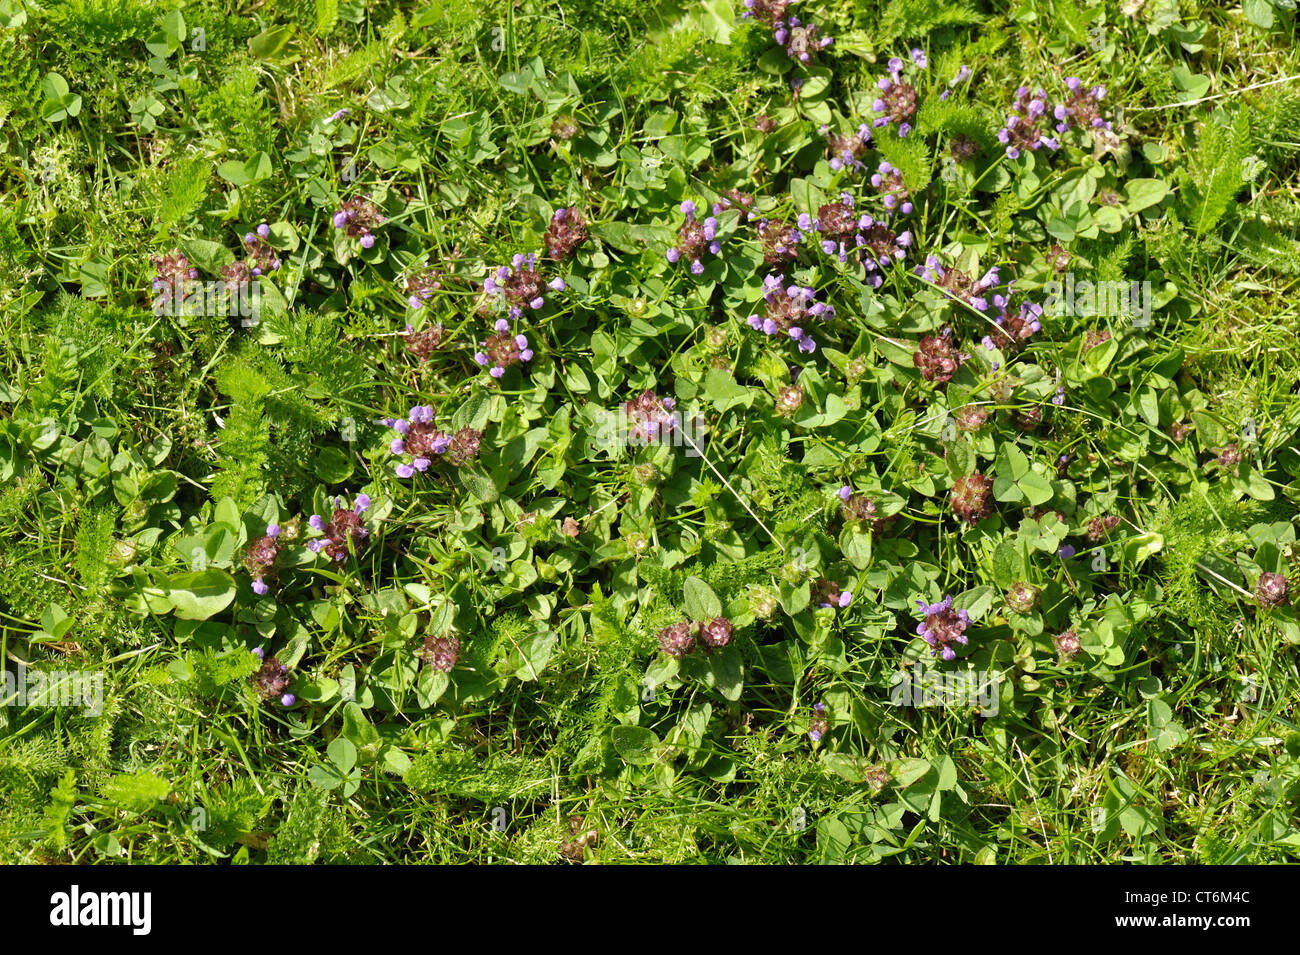 Self-heal (Prunella vulgaris) stunted flowering plants in close cut lawn grass Stock Photo